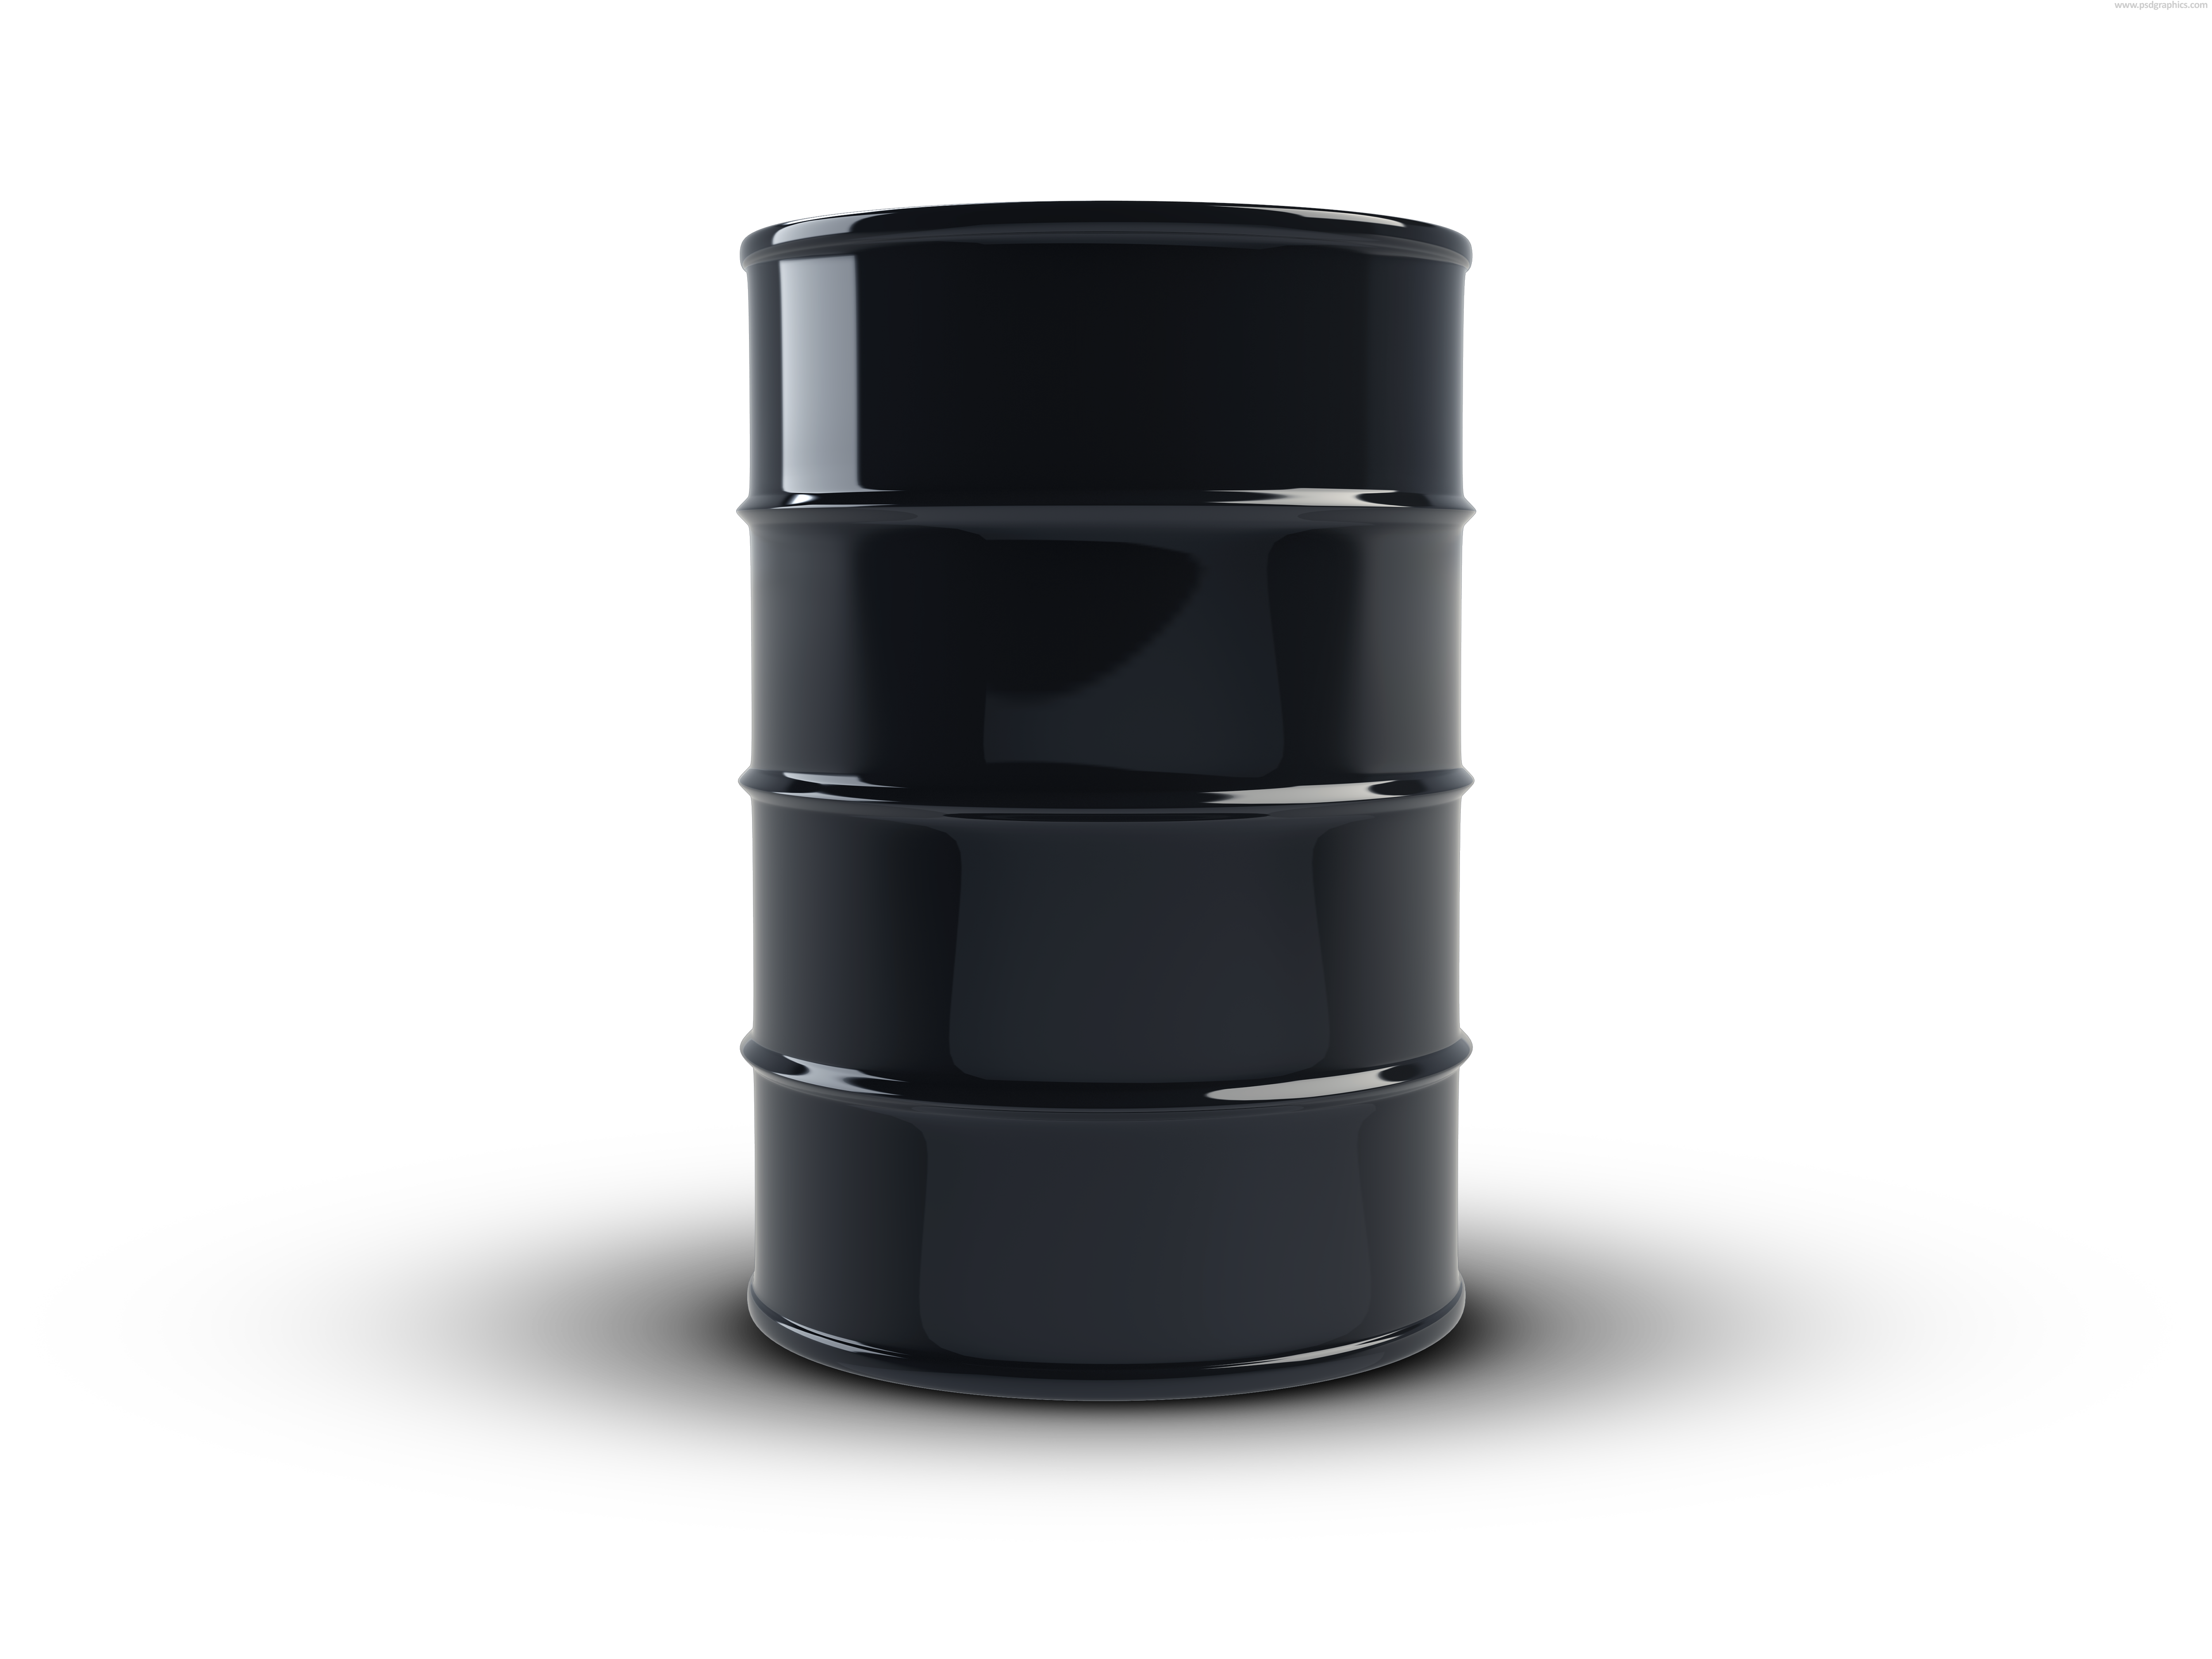 Black Crude Barrel, Black, Cr